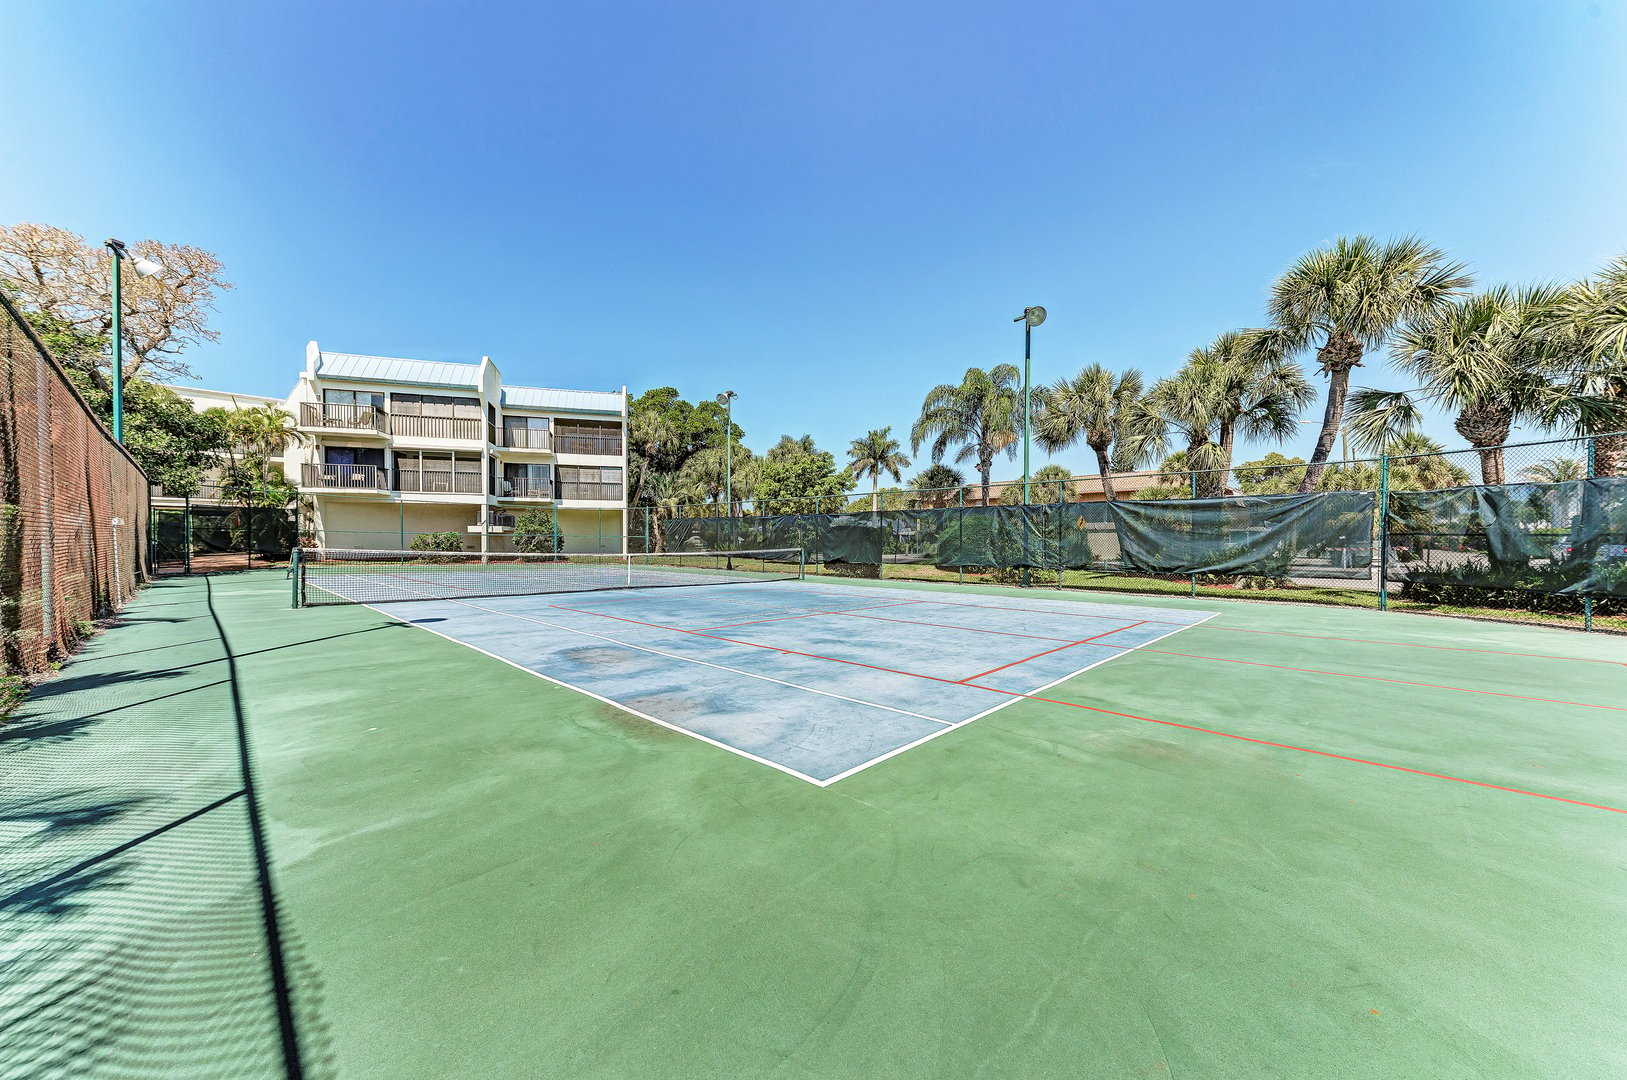 Sun Plaza West condo tennis court